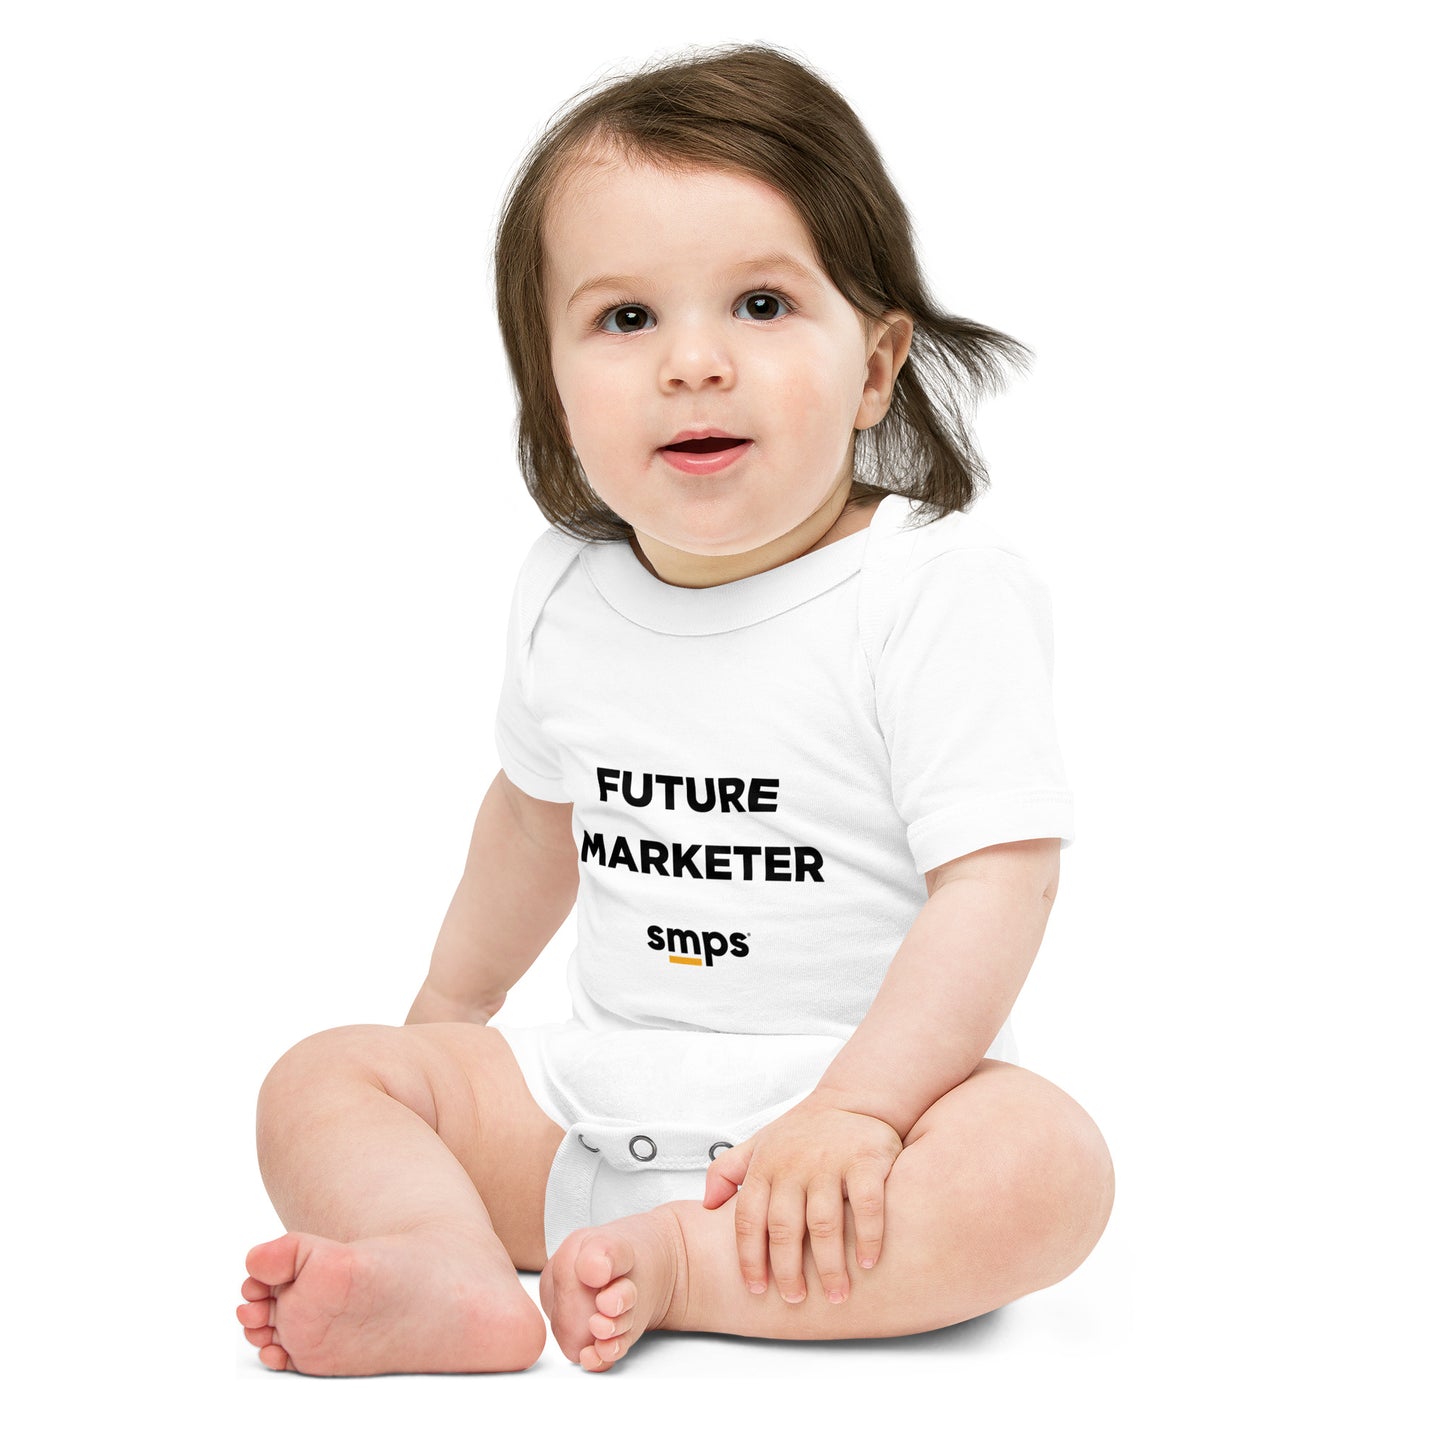 Future Marketer Baby short sleeve white one piece